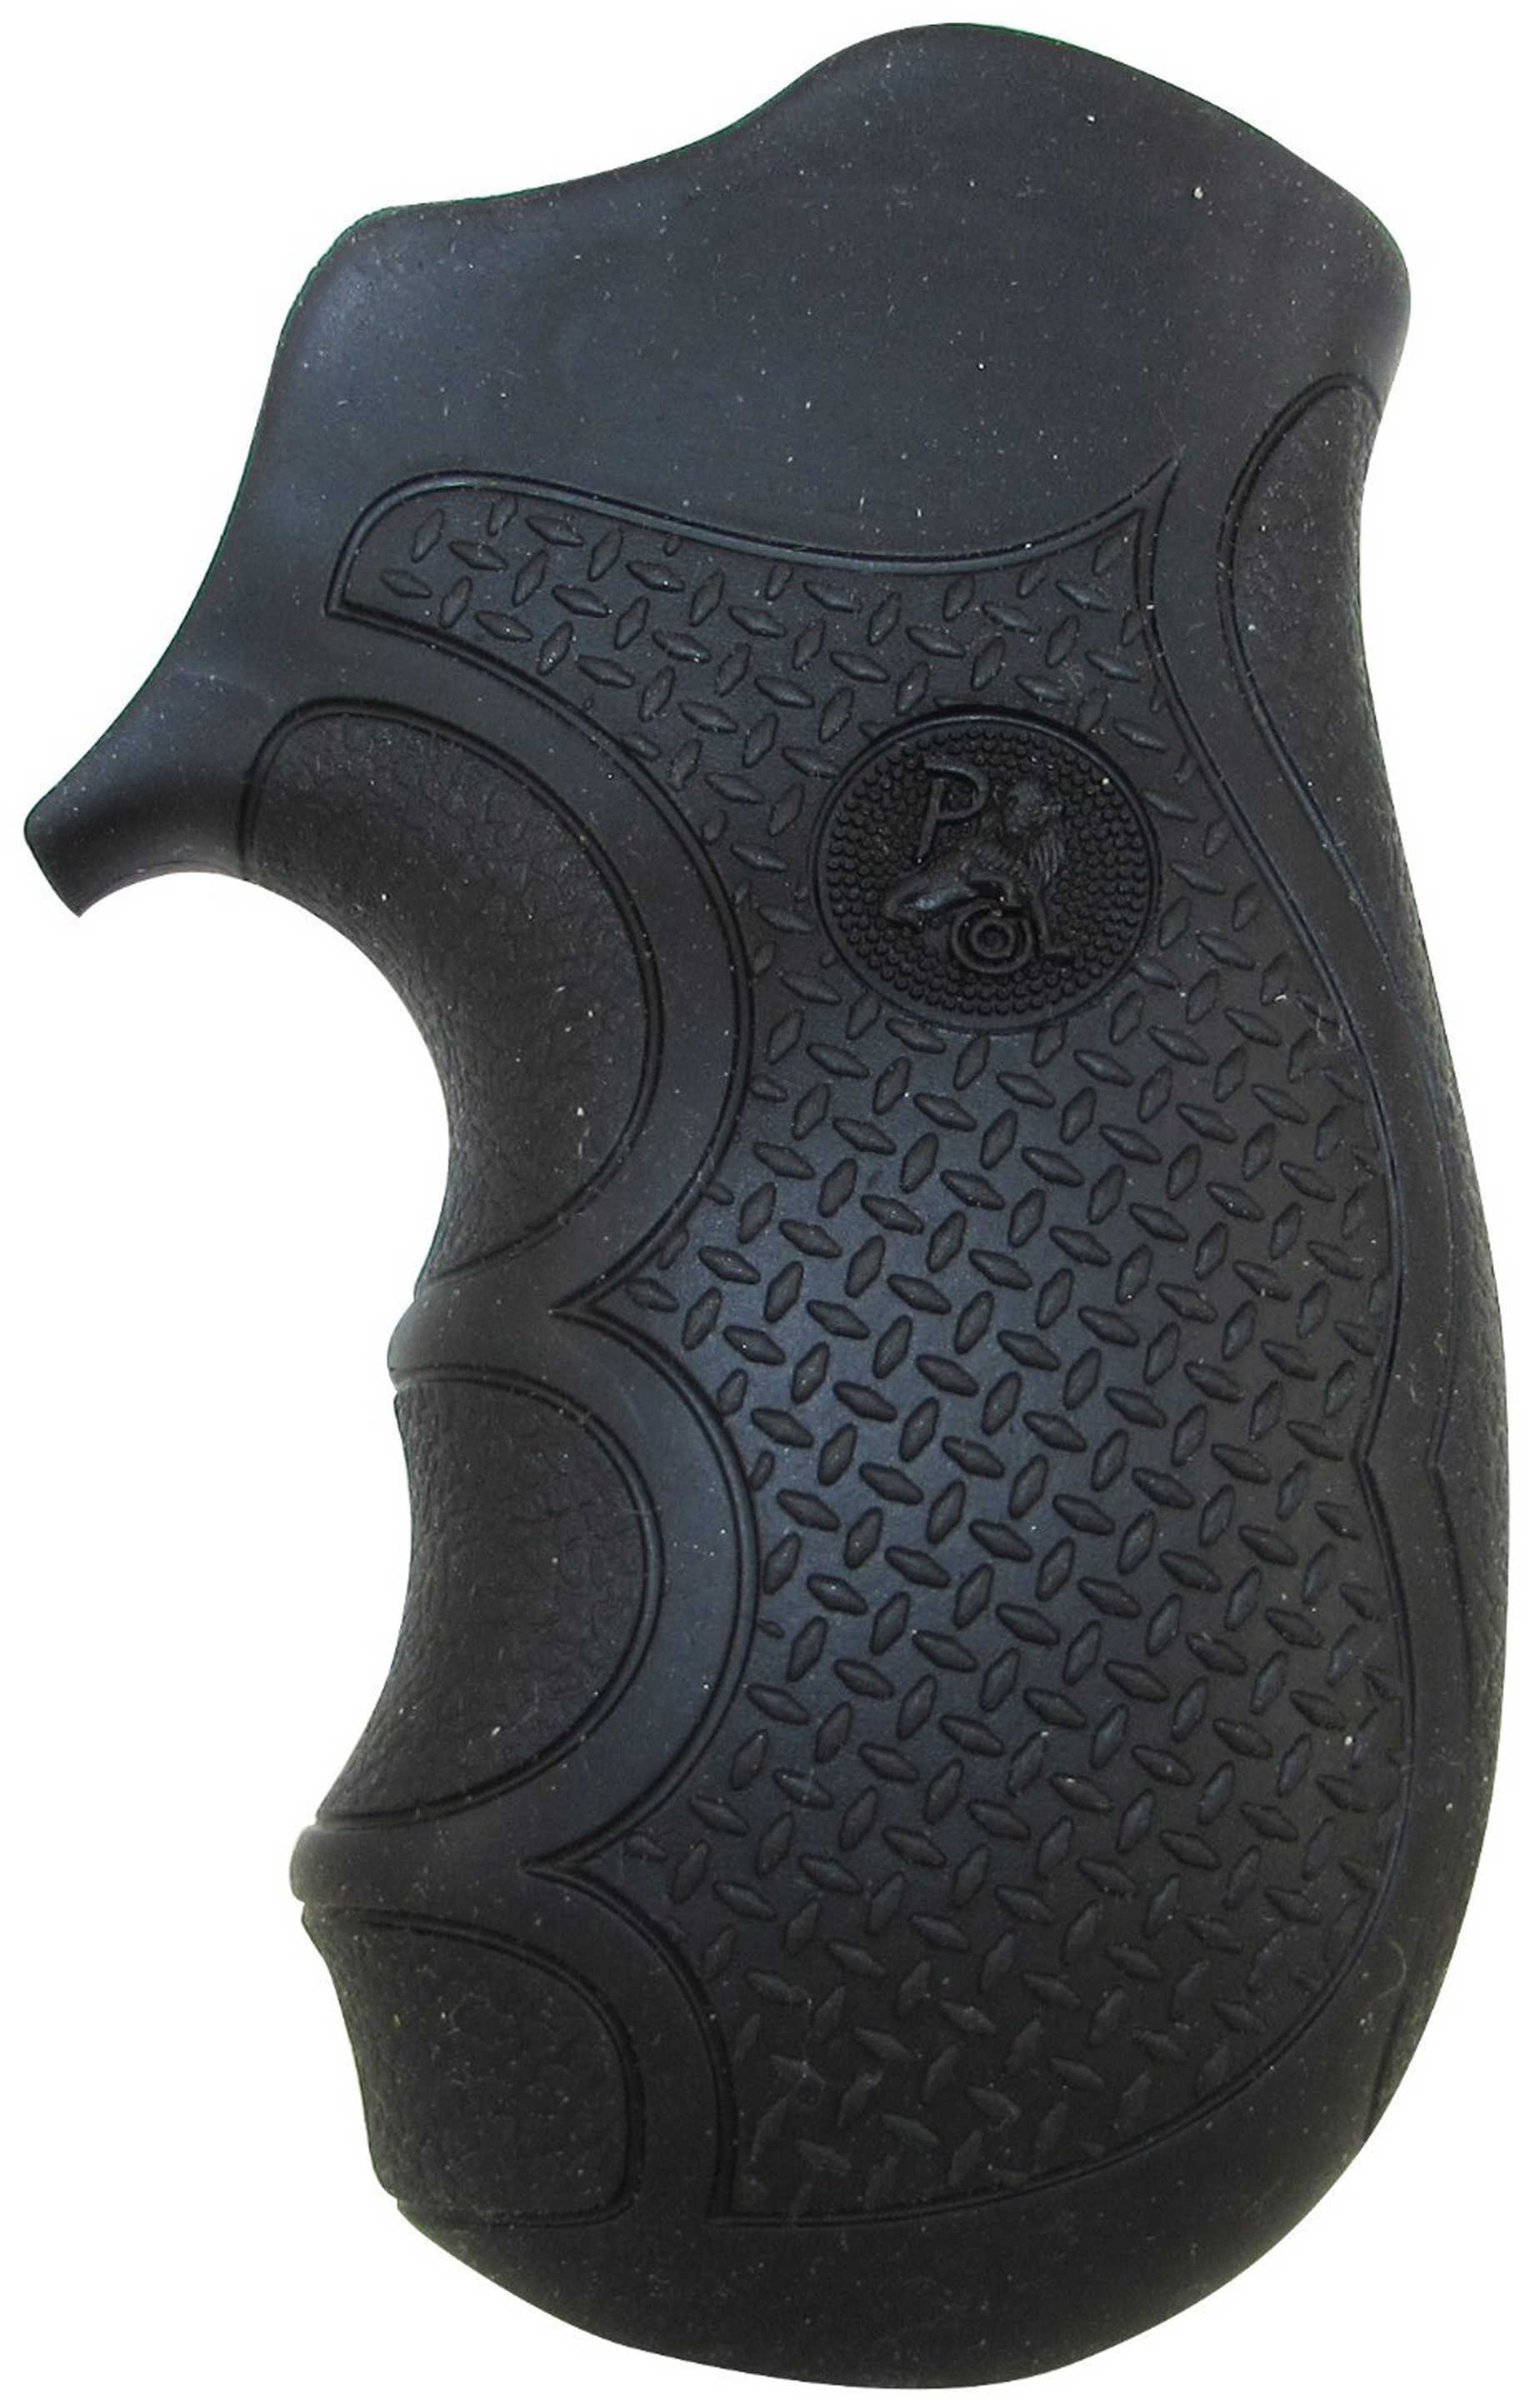 Pachmayr 02482 Diamond Pro Ergonomic Pistol Grip Ruger® Blk ABS Polymer